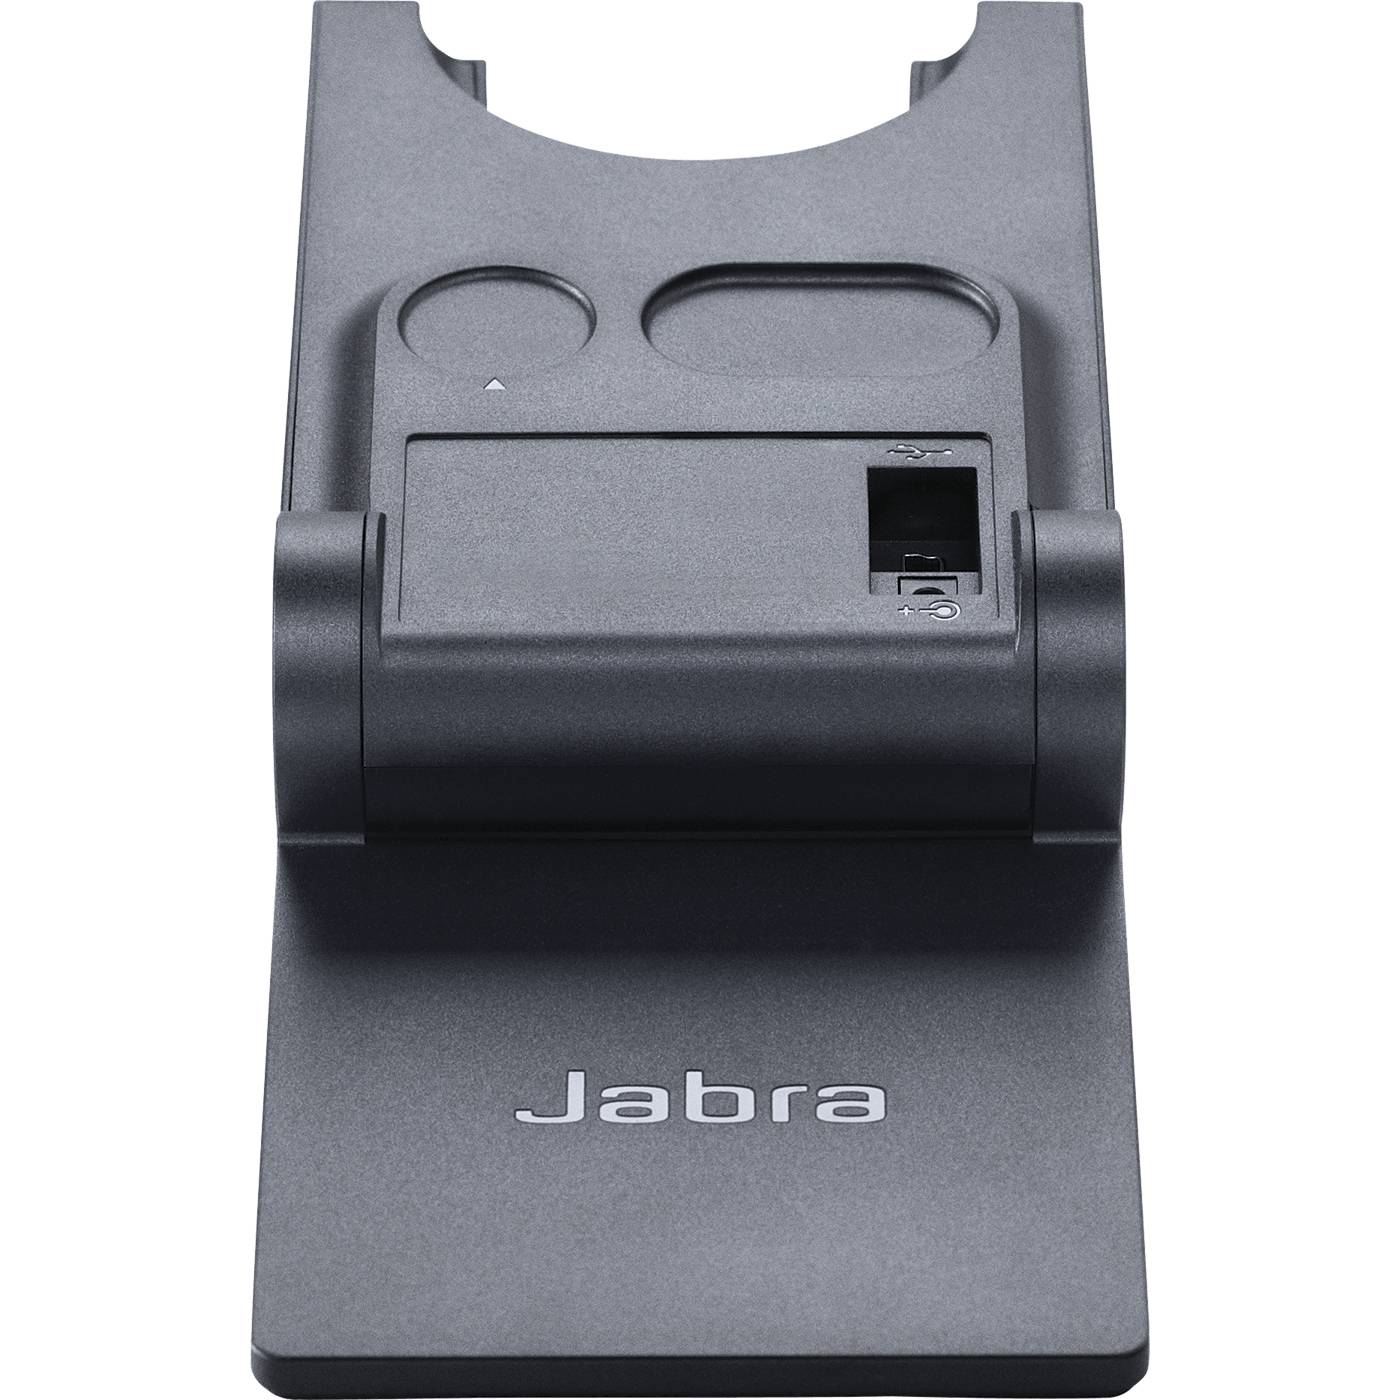 Rca Informatique - image du produit : JABRA PRO 930 USB IN